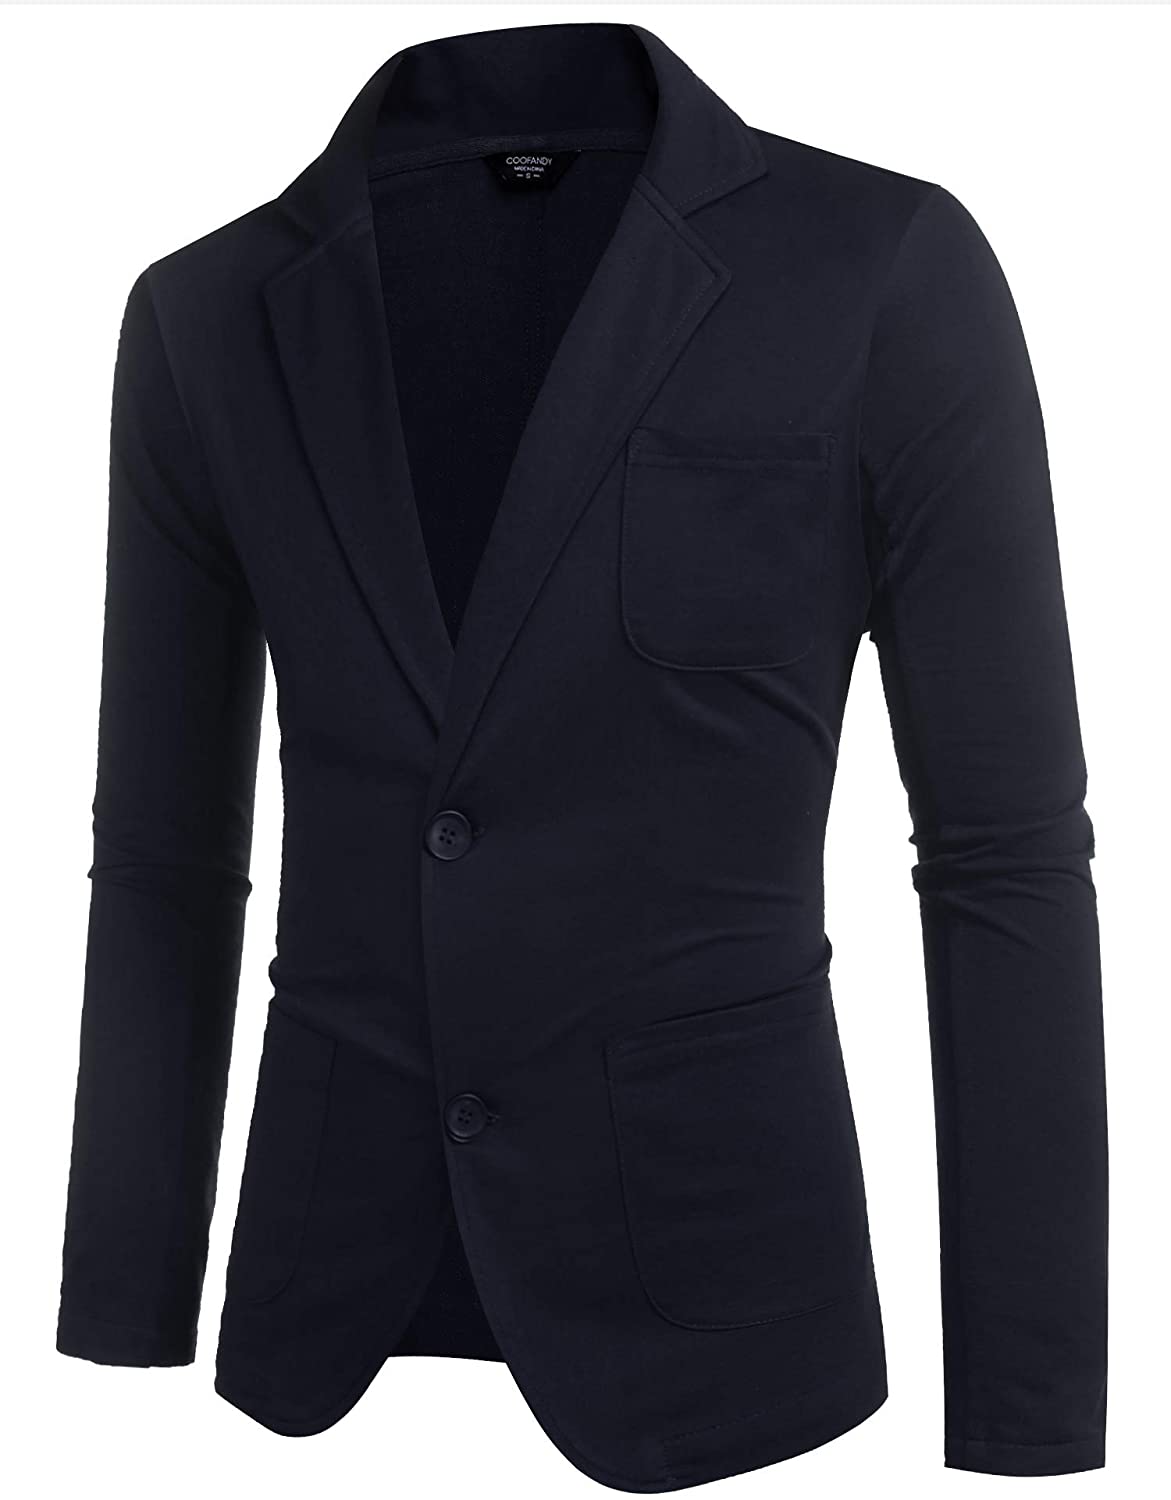 COOFANDY Men's Casual Blazers Cotton Slim Fit Sport Coats Lightweight Two Button Suit Jackets 